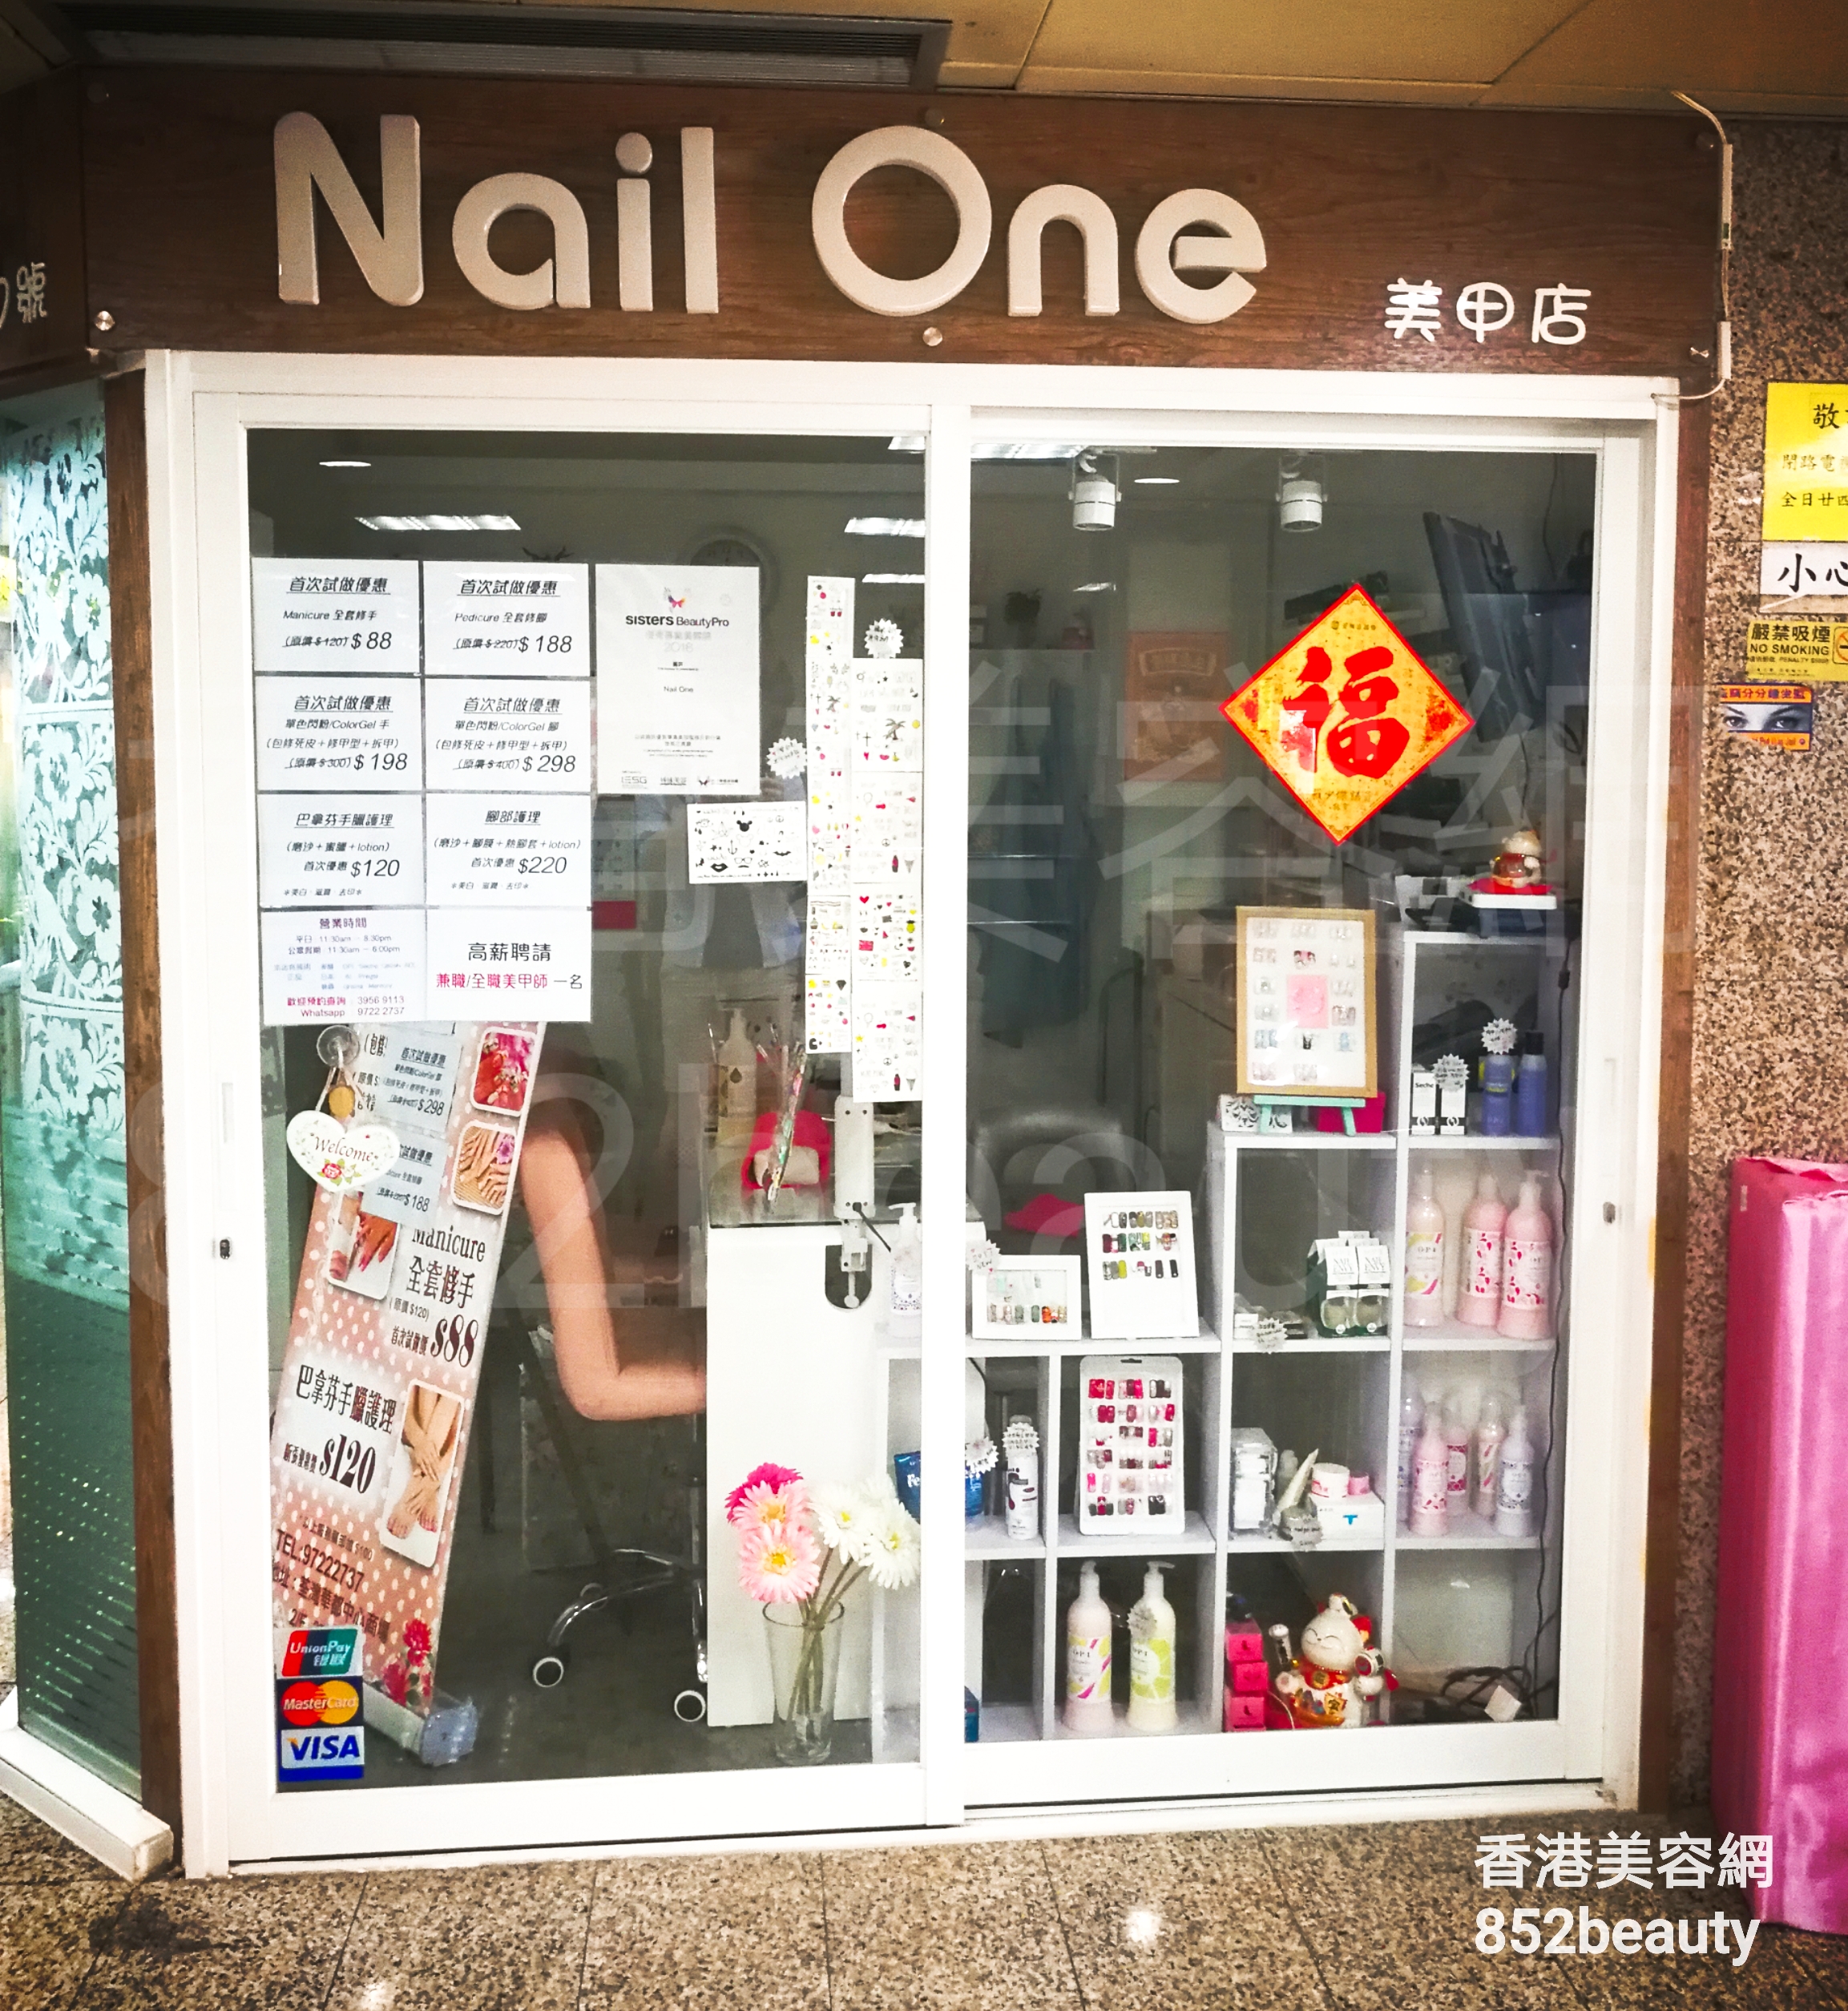 手脚护理: Nail One 美甲店